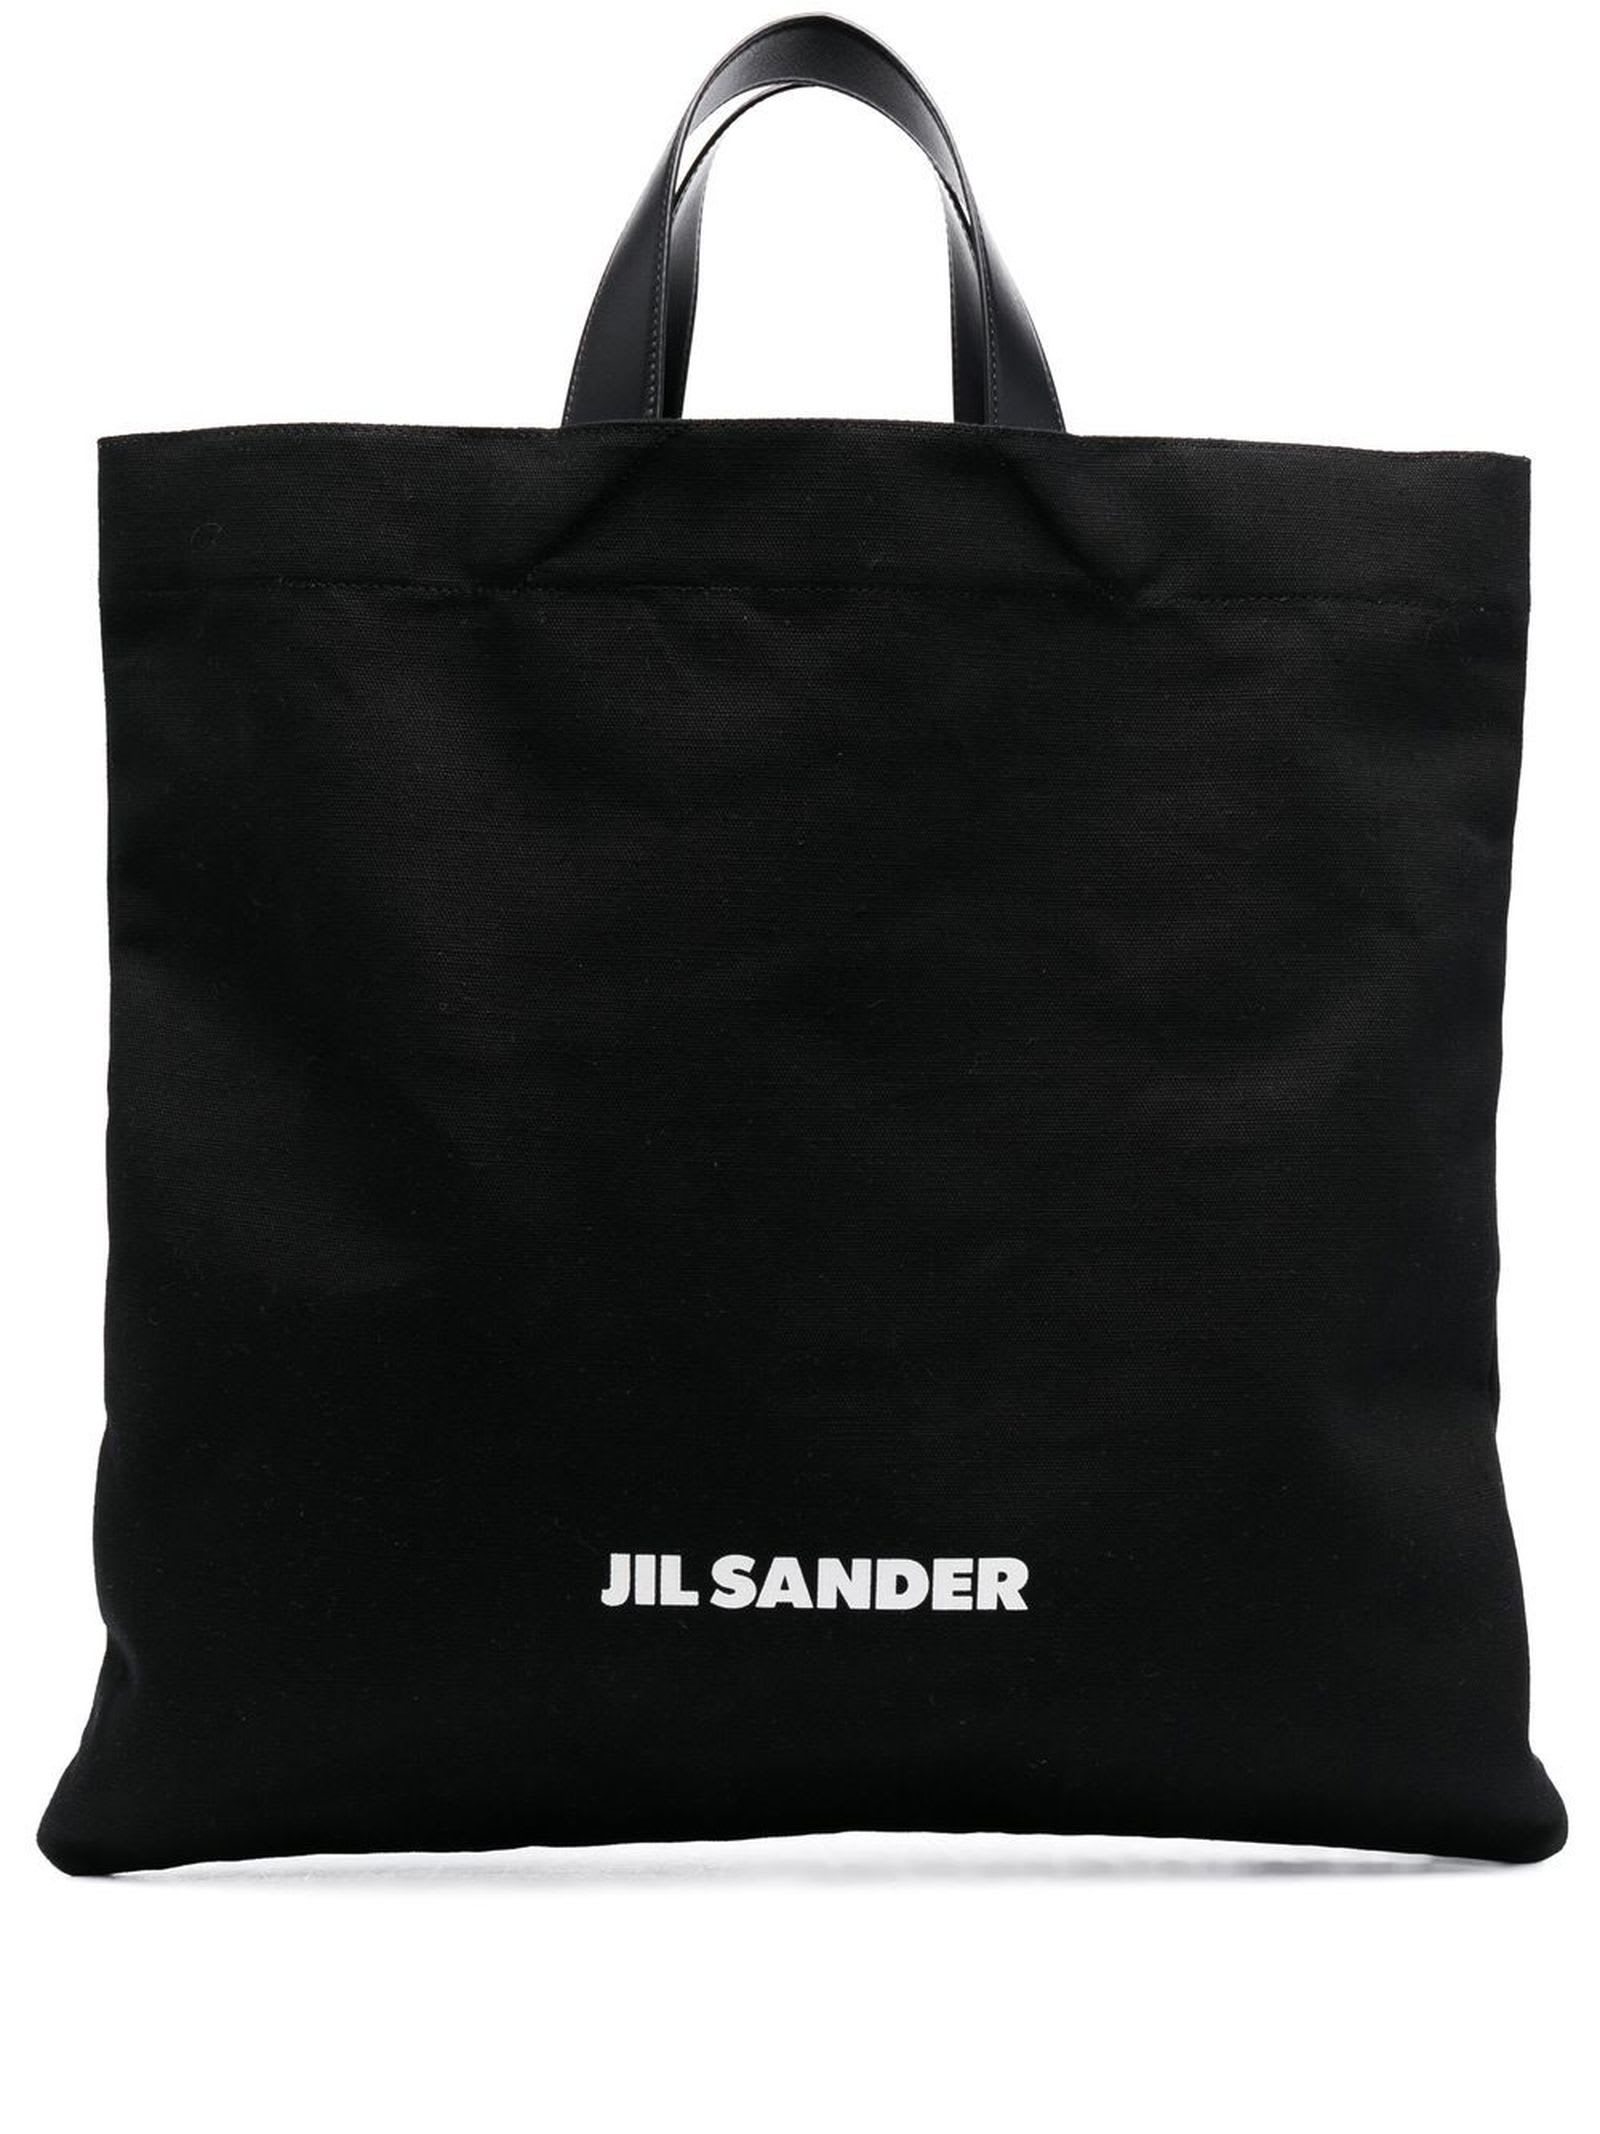 Jil Sander Black Tote Bag